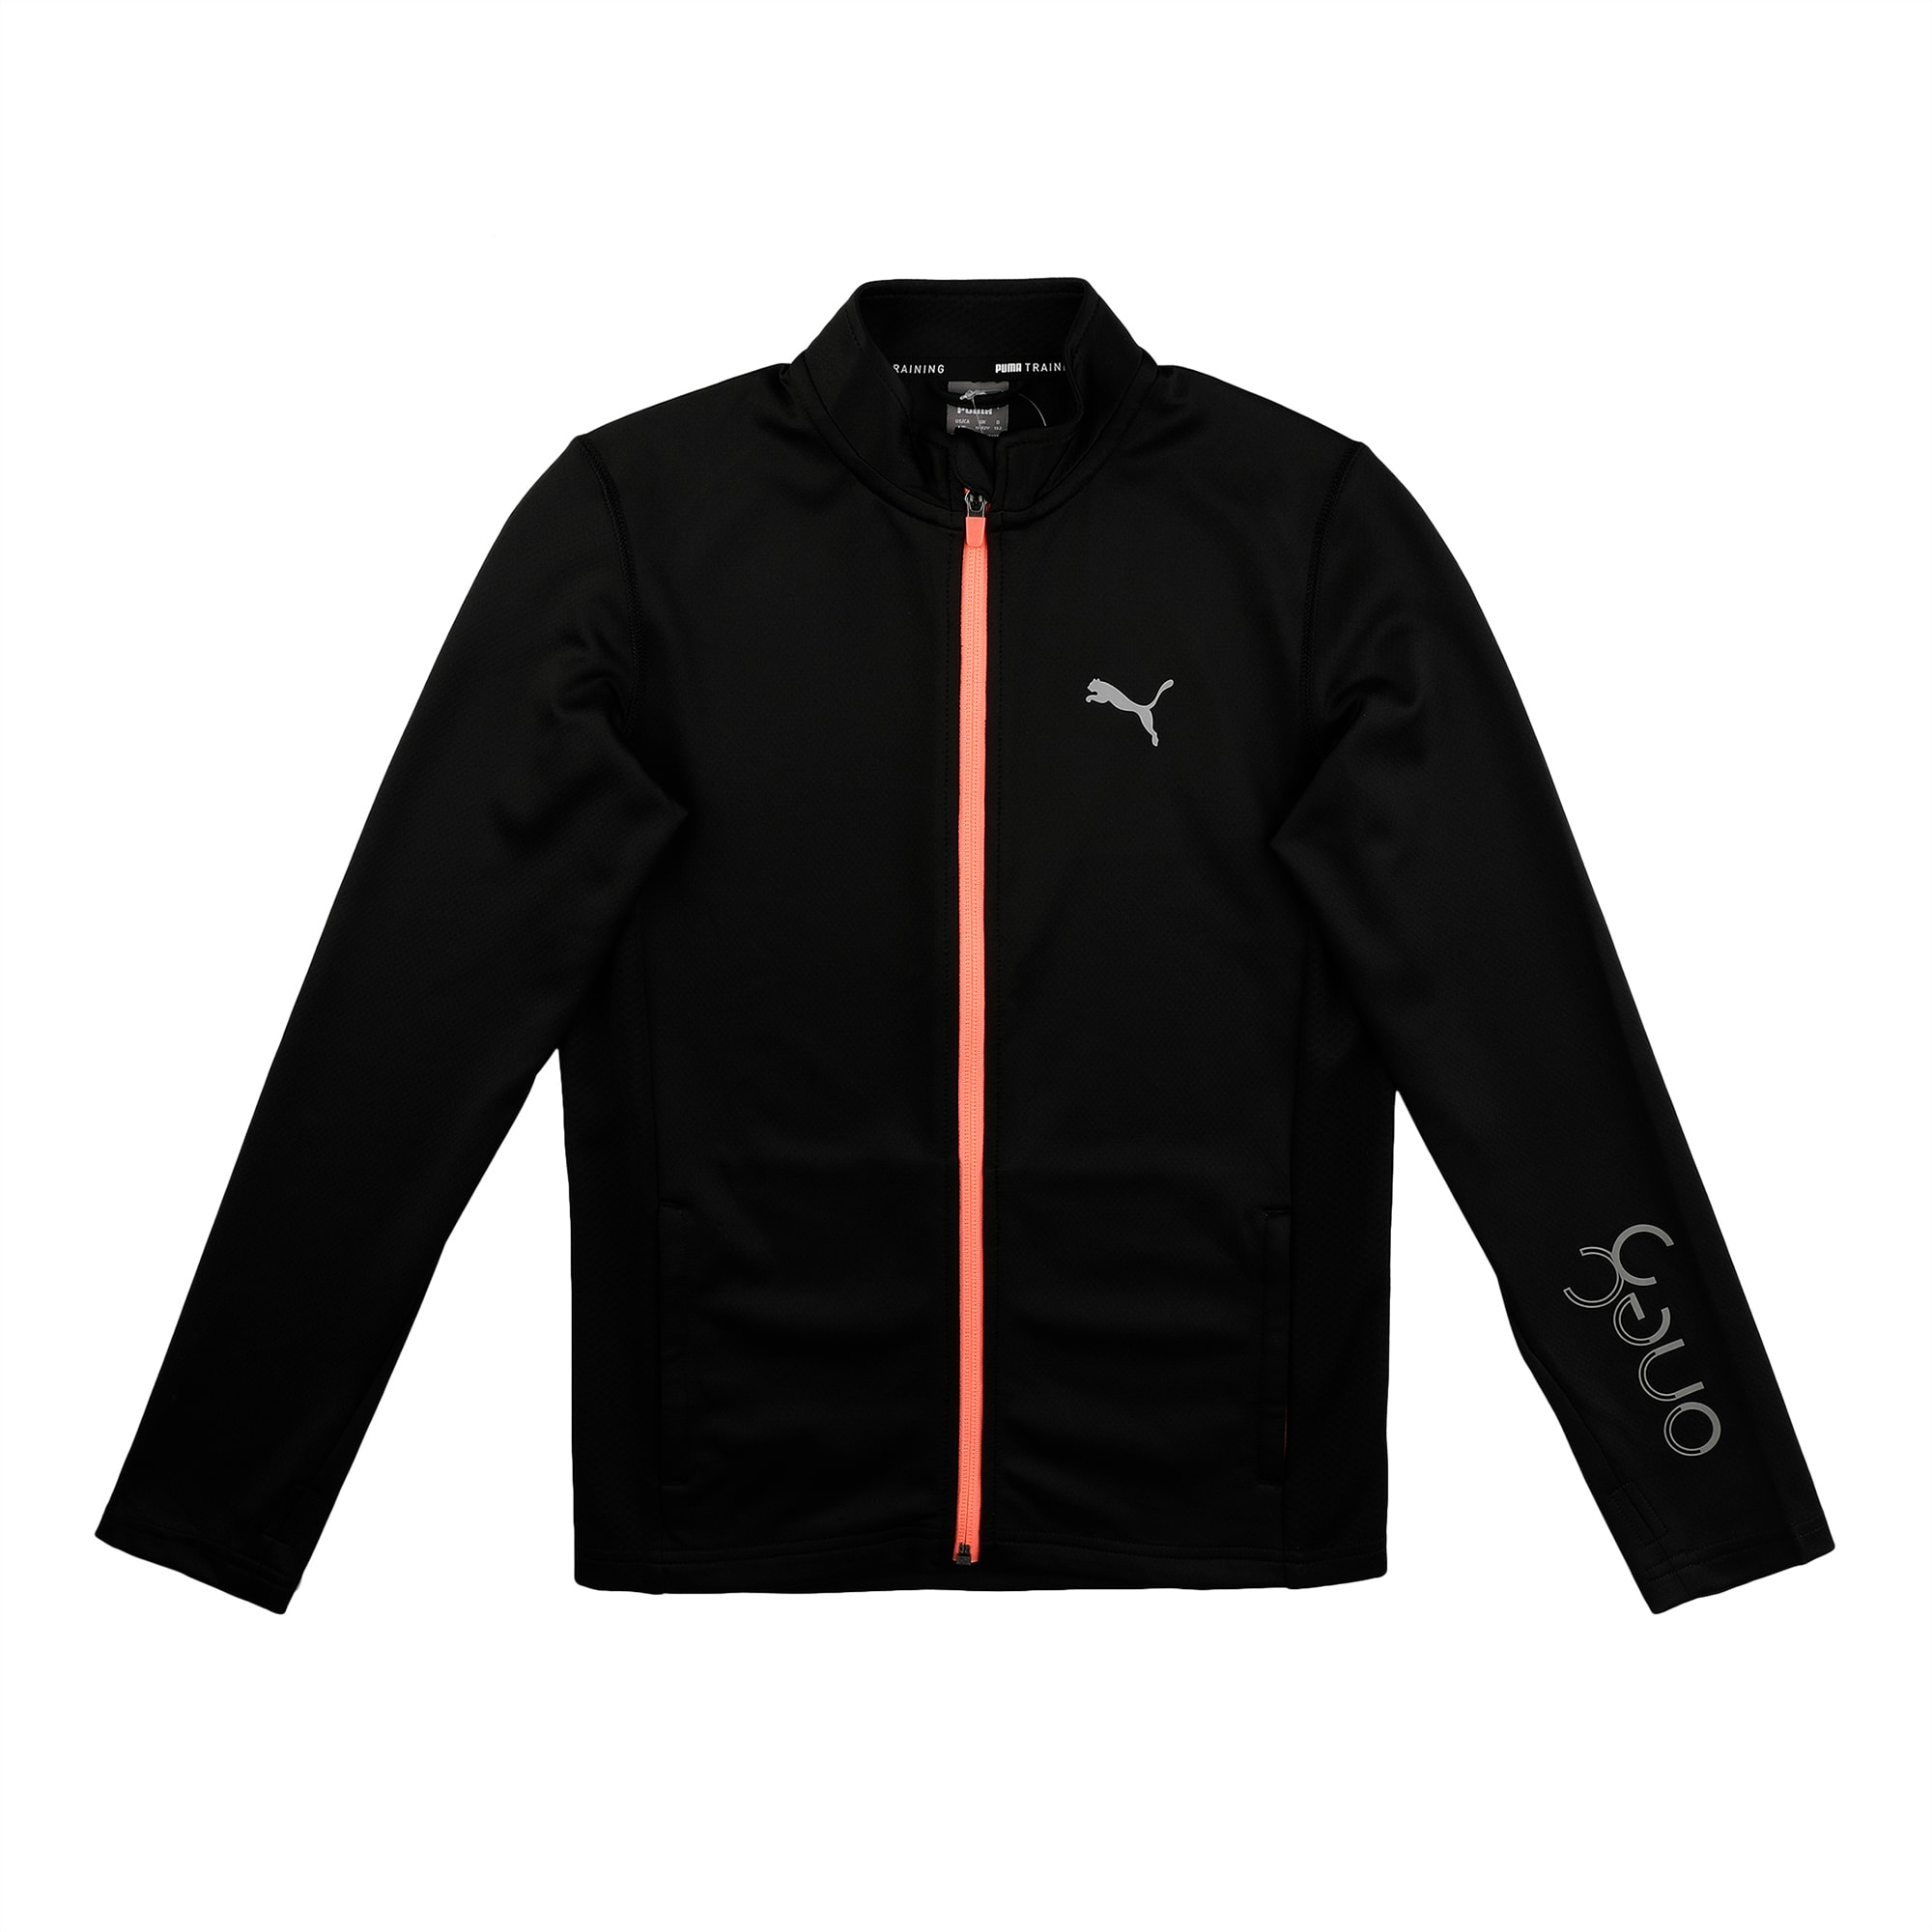 puma one8 black jacket